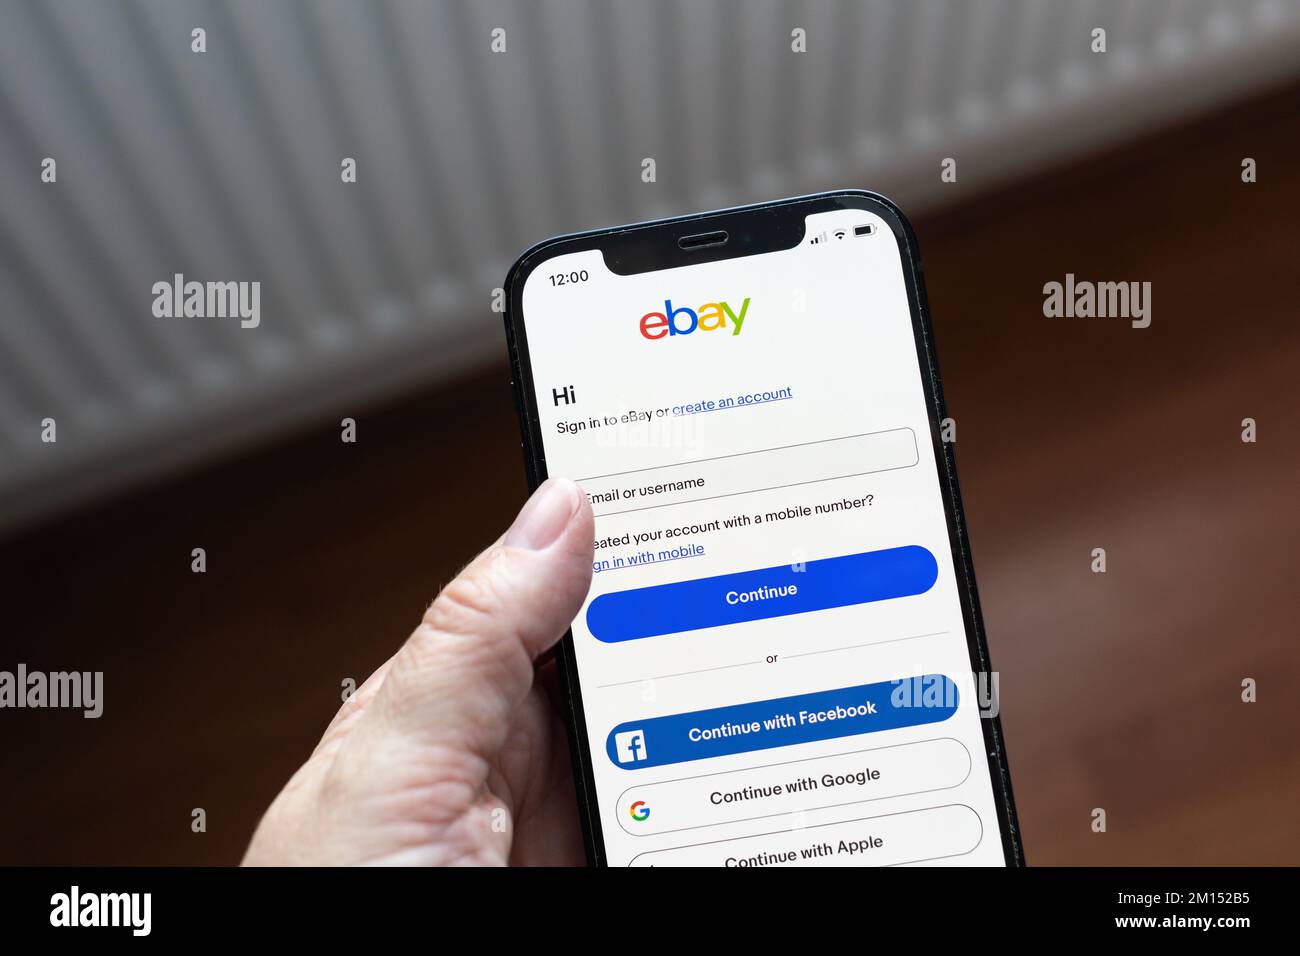 Ebay login screen on a smartphone Stock Photo